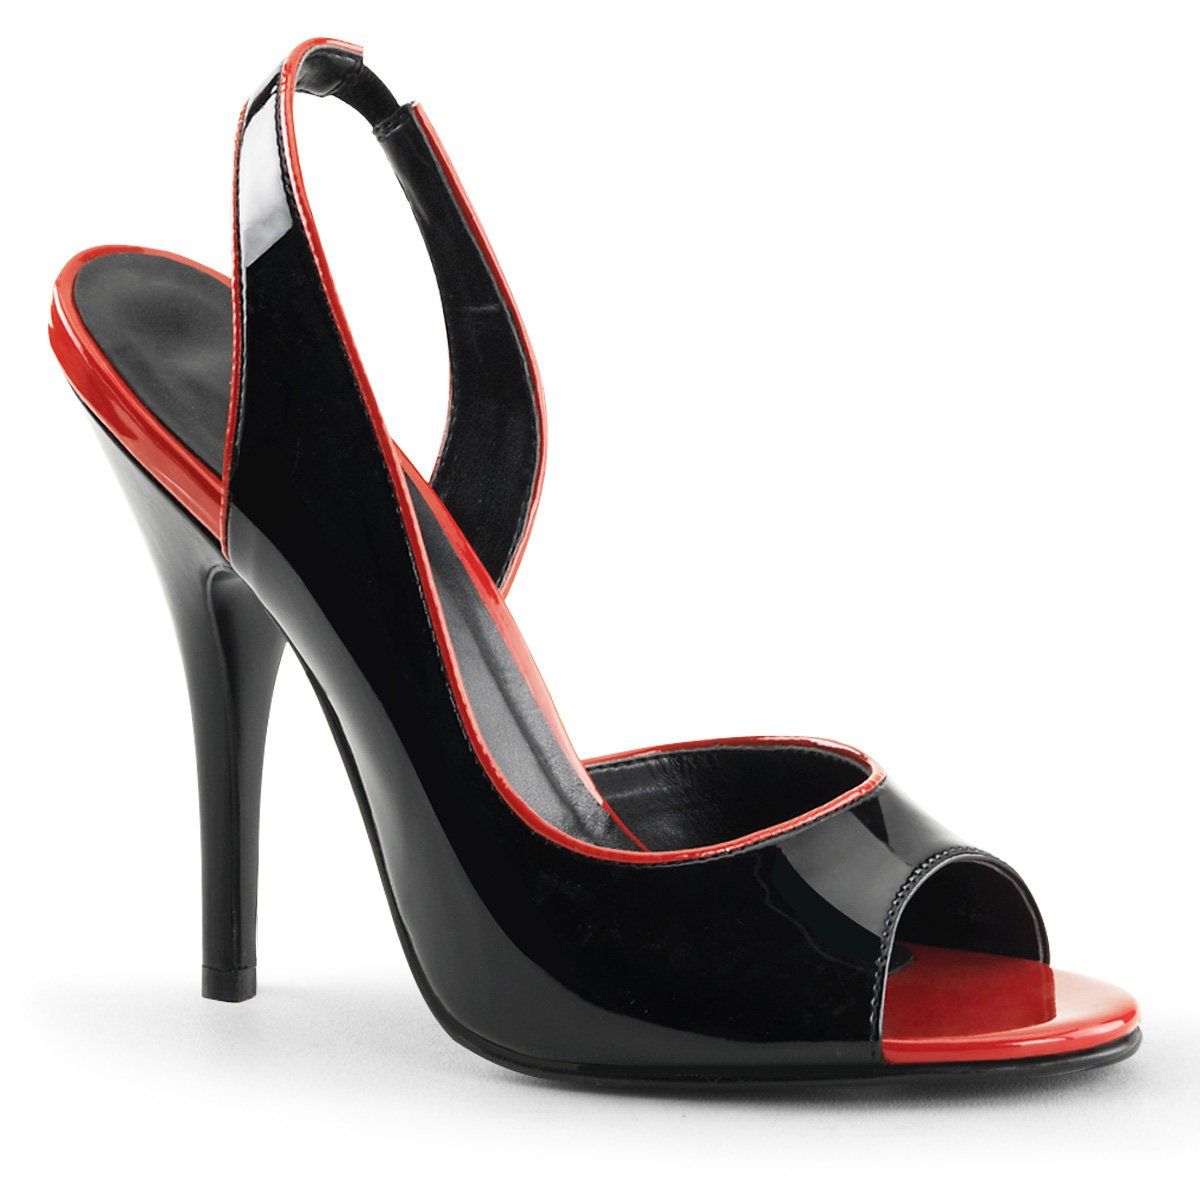 SEDUCE-117 Black-Red Patent Sandal Pleaser